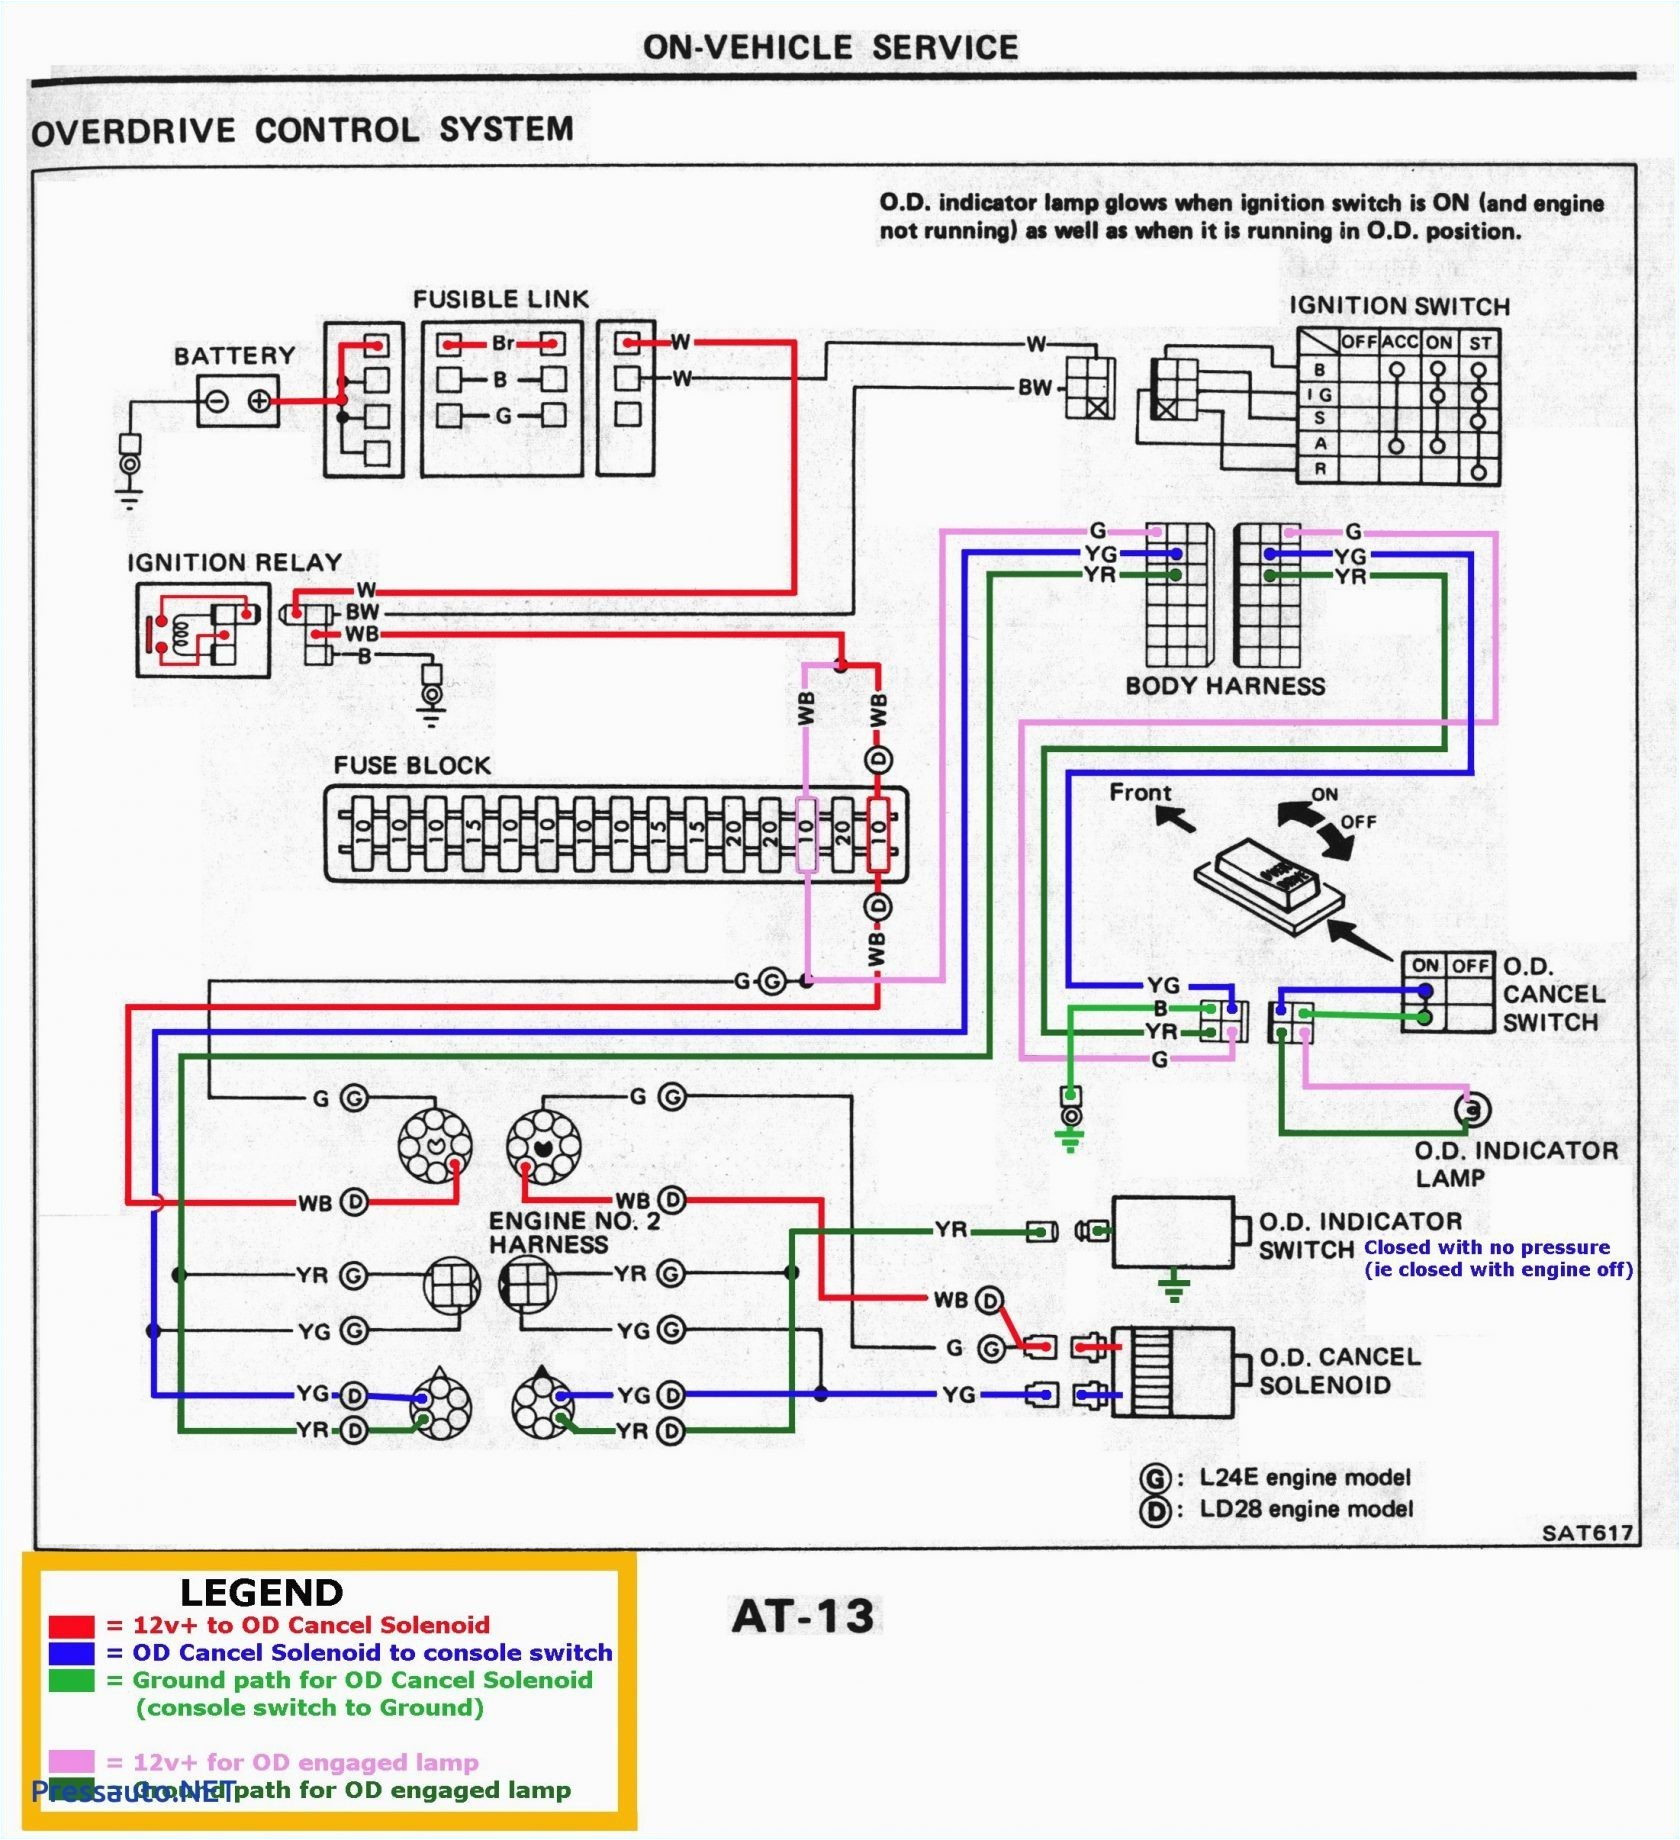 toyota unser wiring diagram wiring diagrams for toyota unser wiring diagram toyota unser wiring diagram